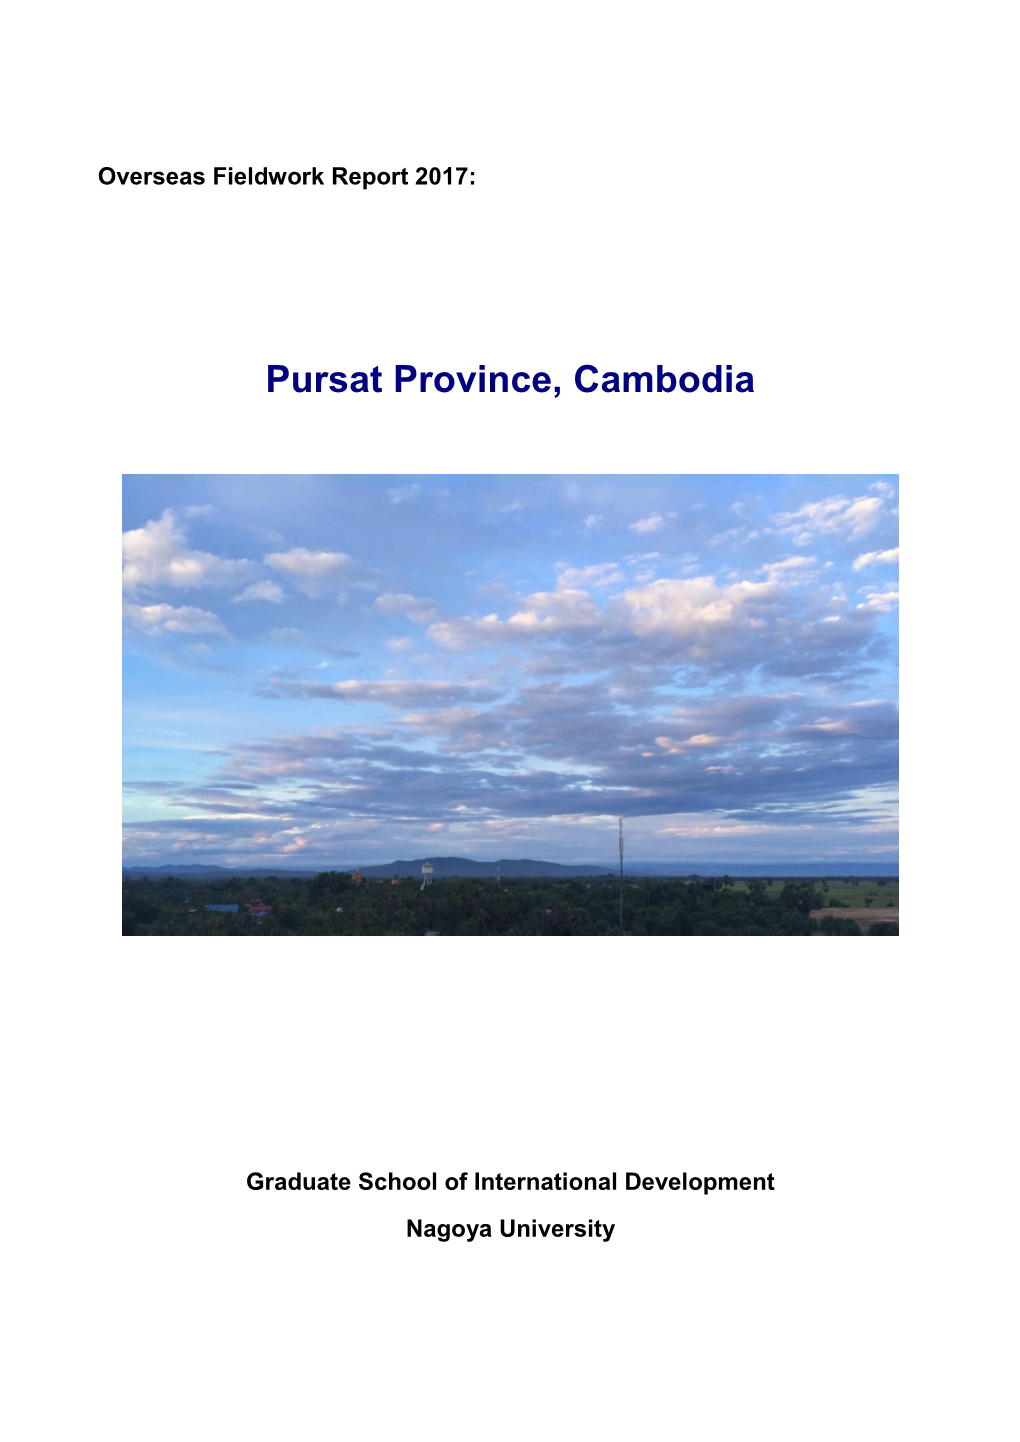 Pursat Province, Cambodia